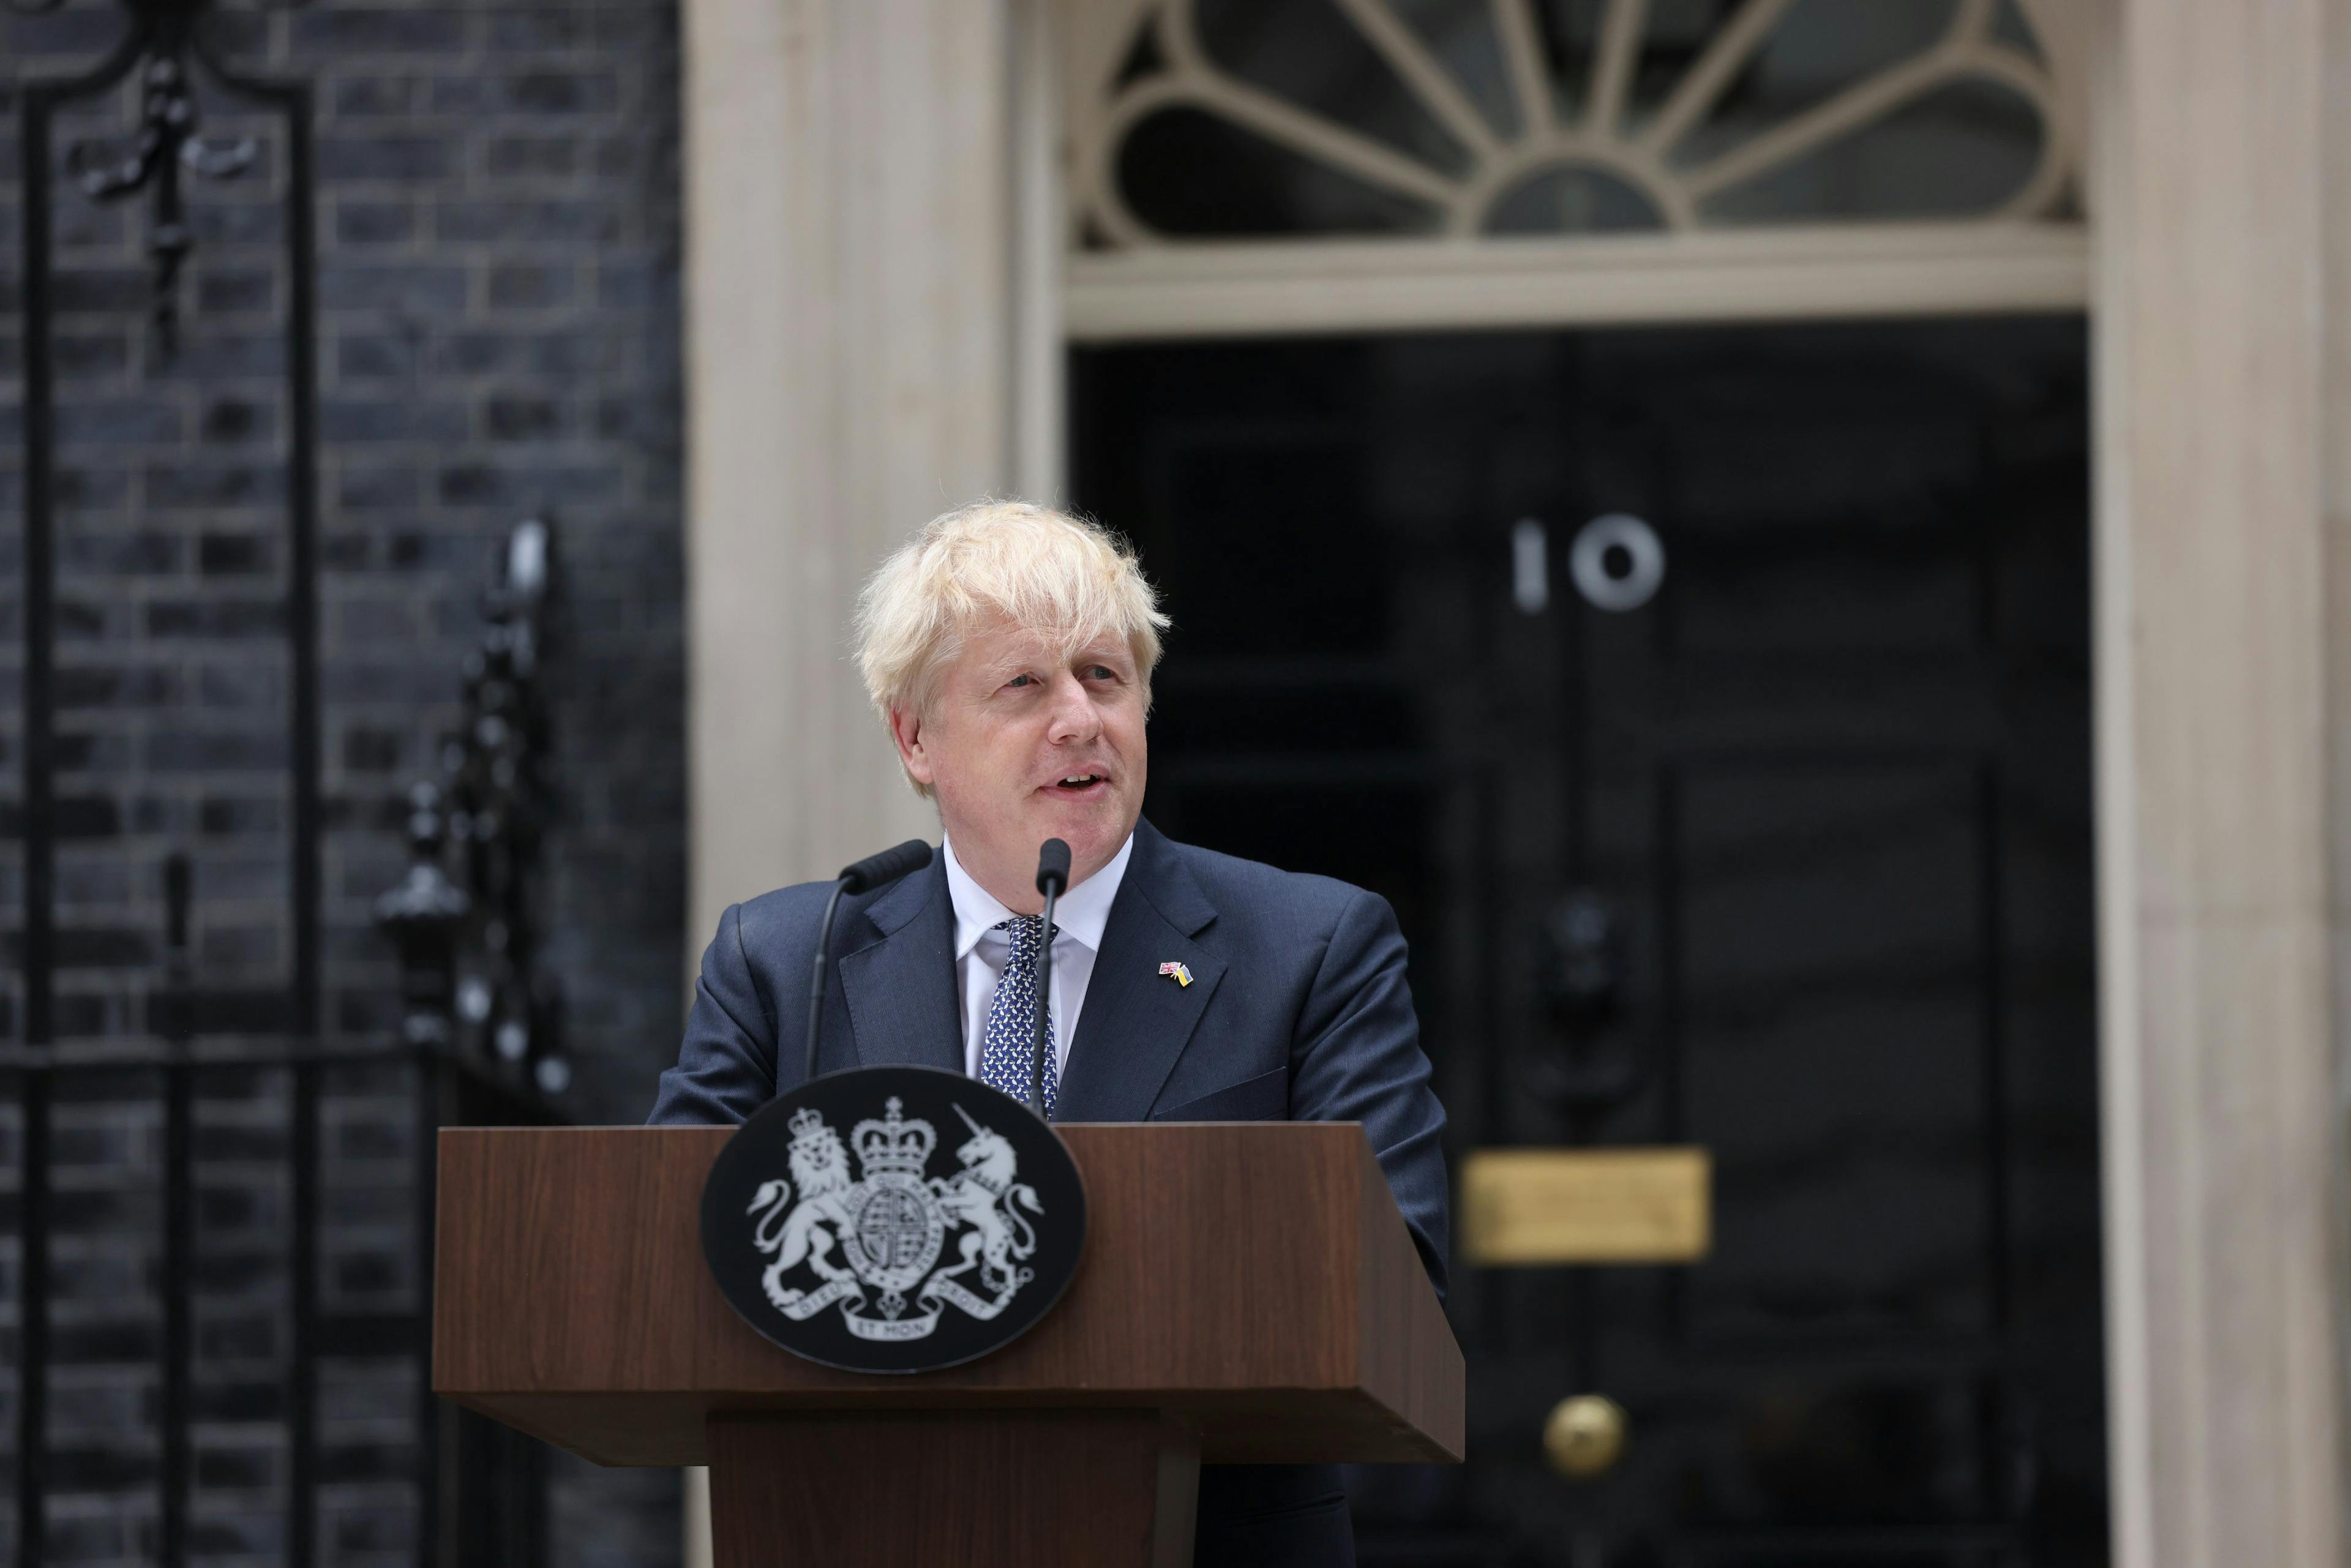 Boris Johnson Resigns as the Prime Minister of the UK